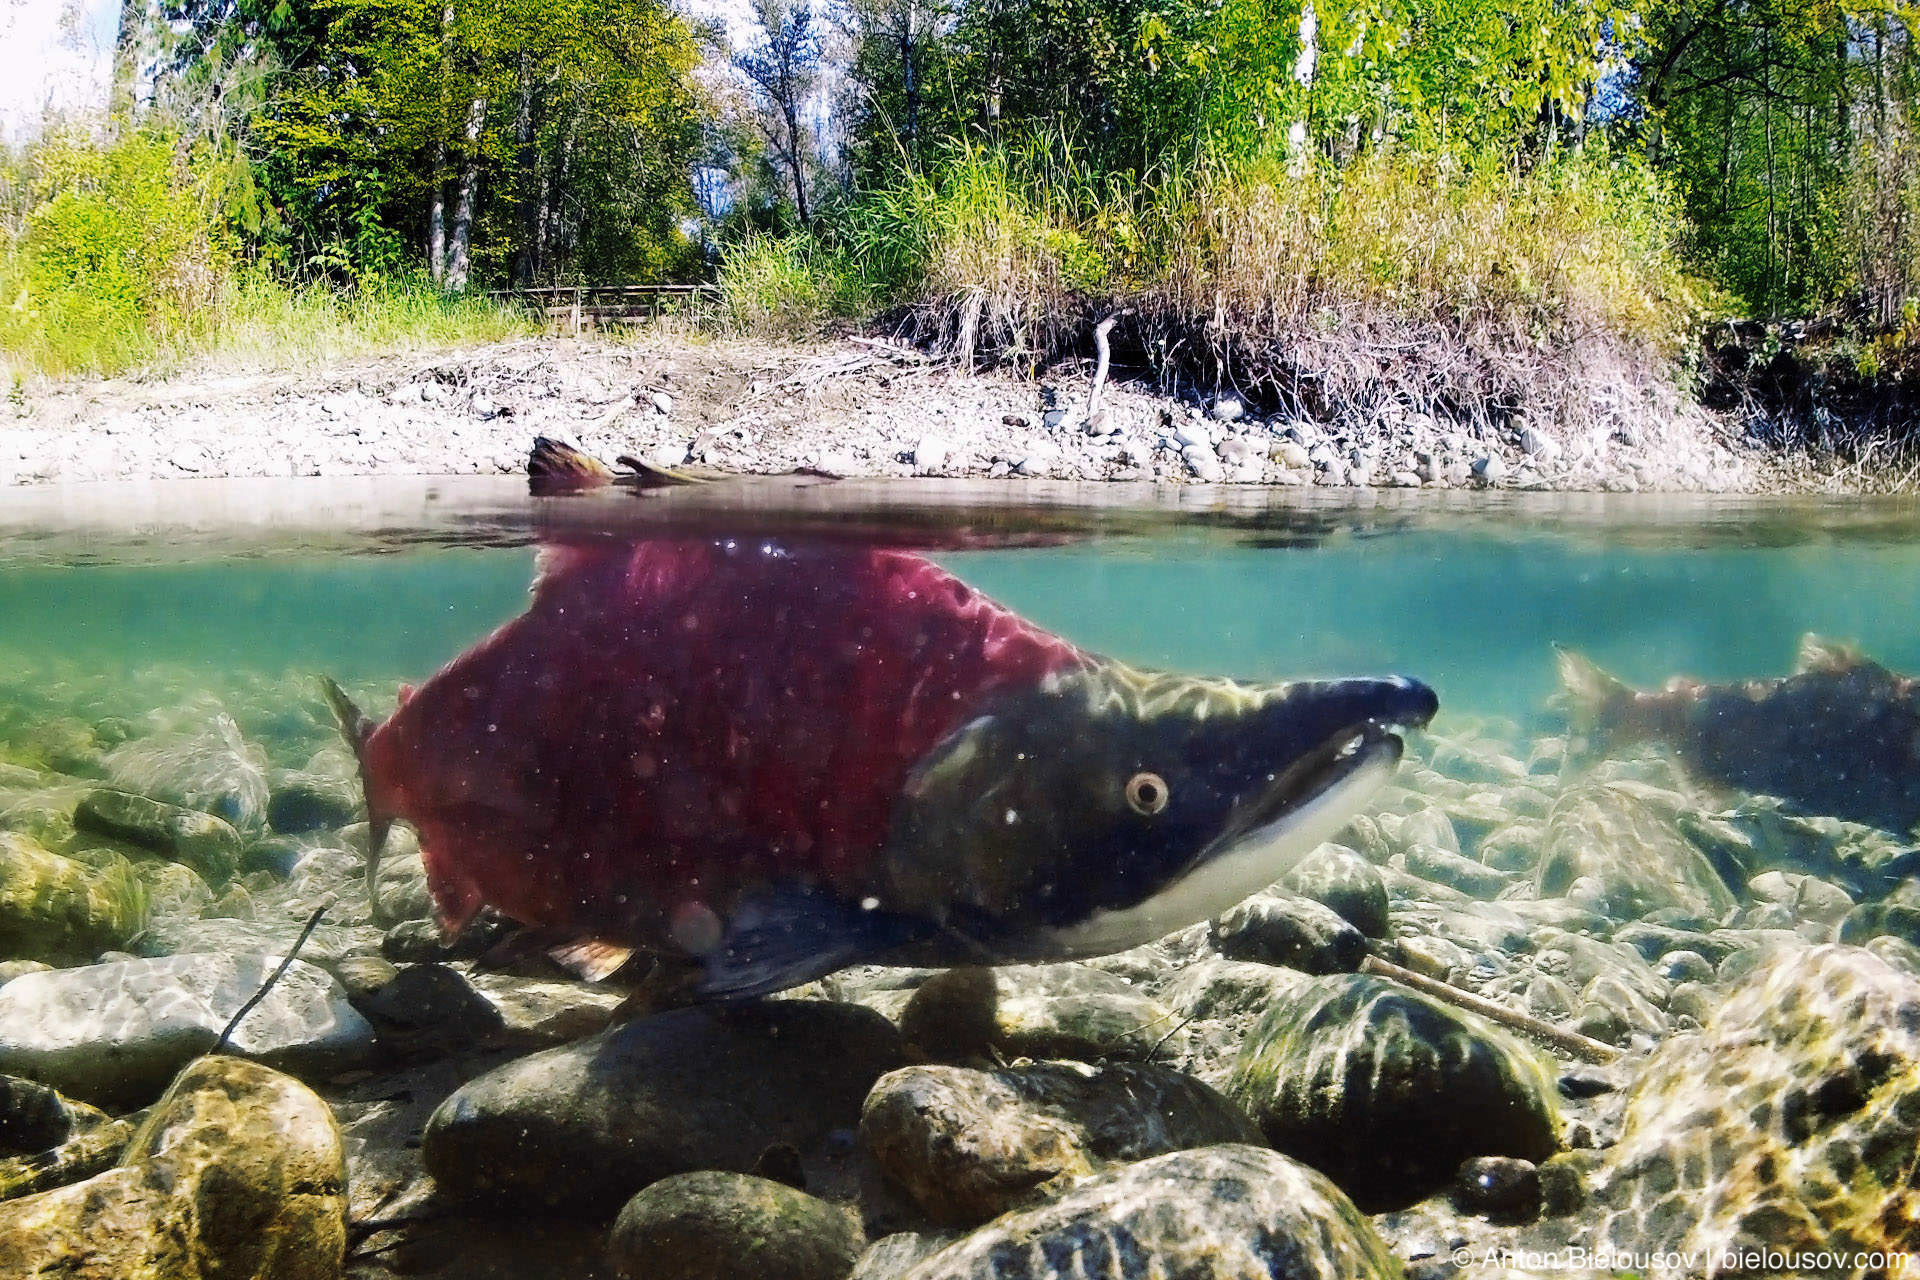 Sockeye salmon underwater in Adams River, BC